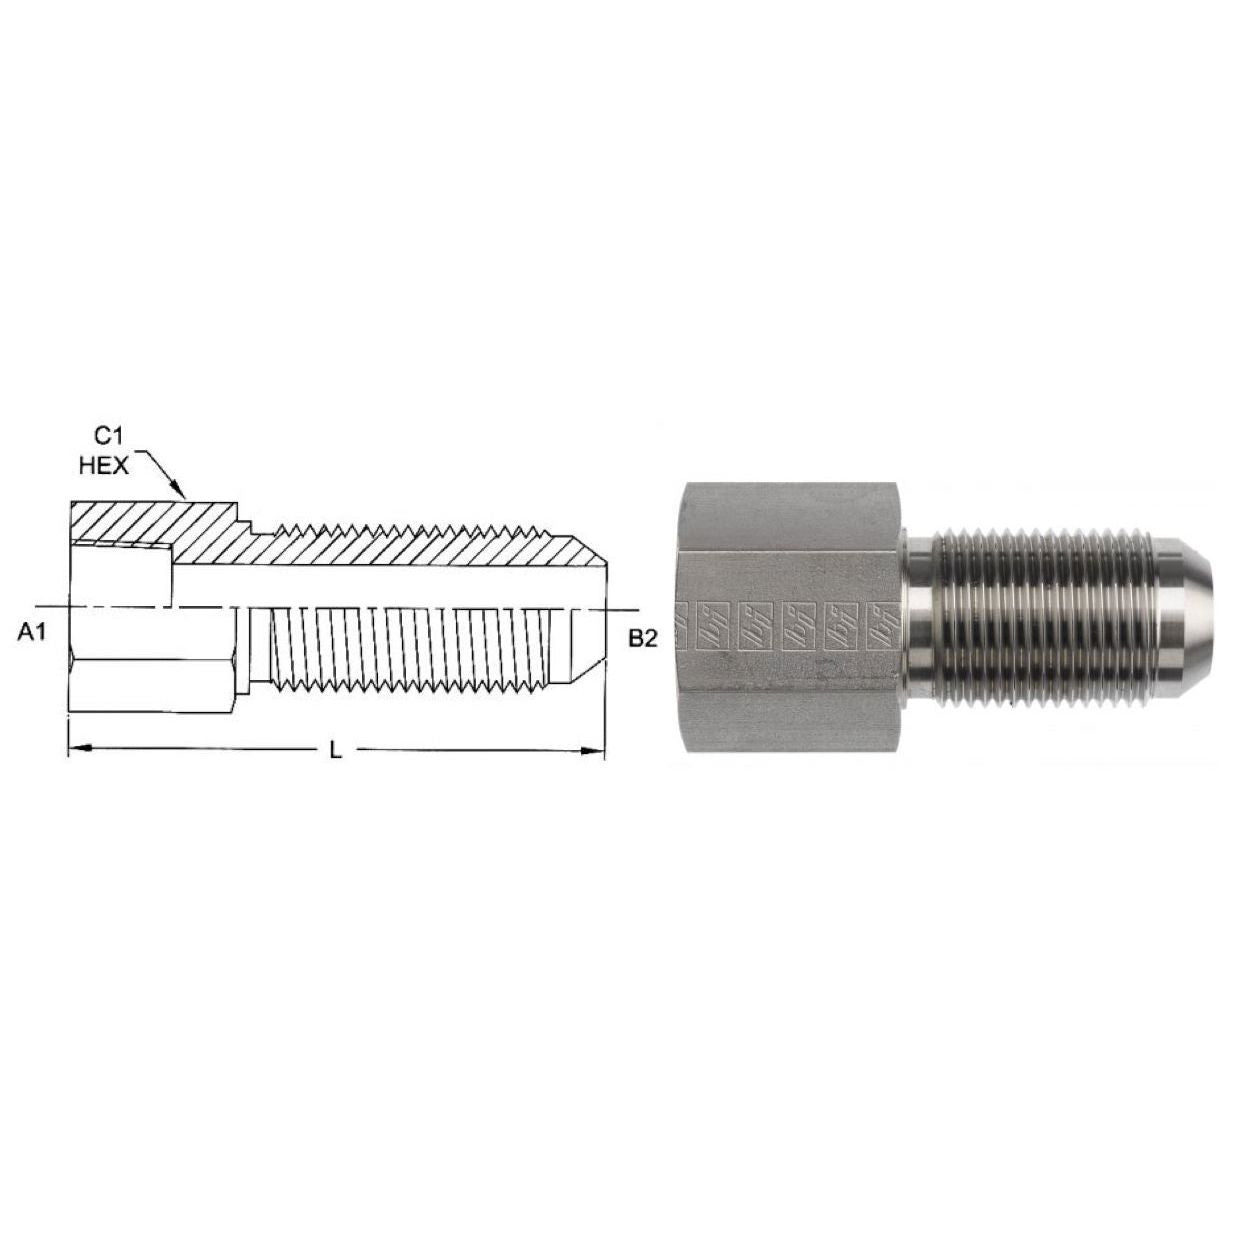 2705-04-04 : OneHydraulics Bulkhead Adapter, Straight, 0.25 (1/4") JIC JIC x 0.25 (1/4") Male, Steel, 6000psi